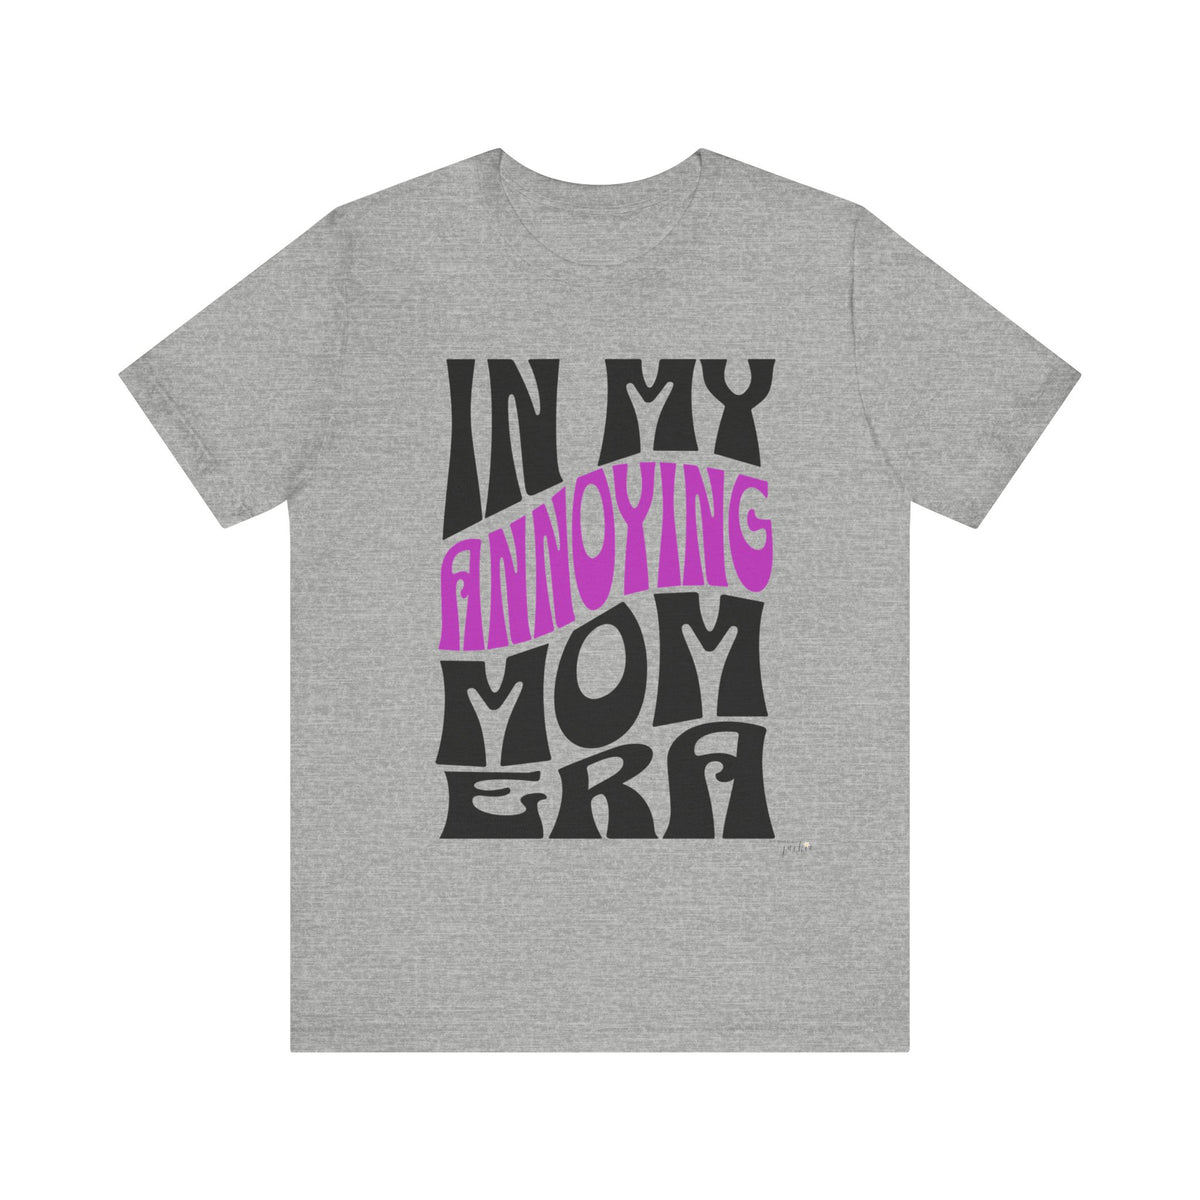 In My Annoying Mom Era - Short Sleeve Graphic T-shirt